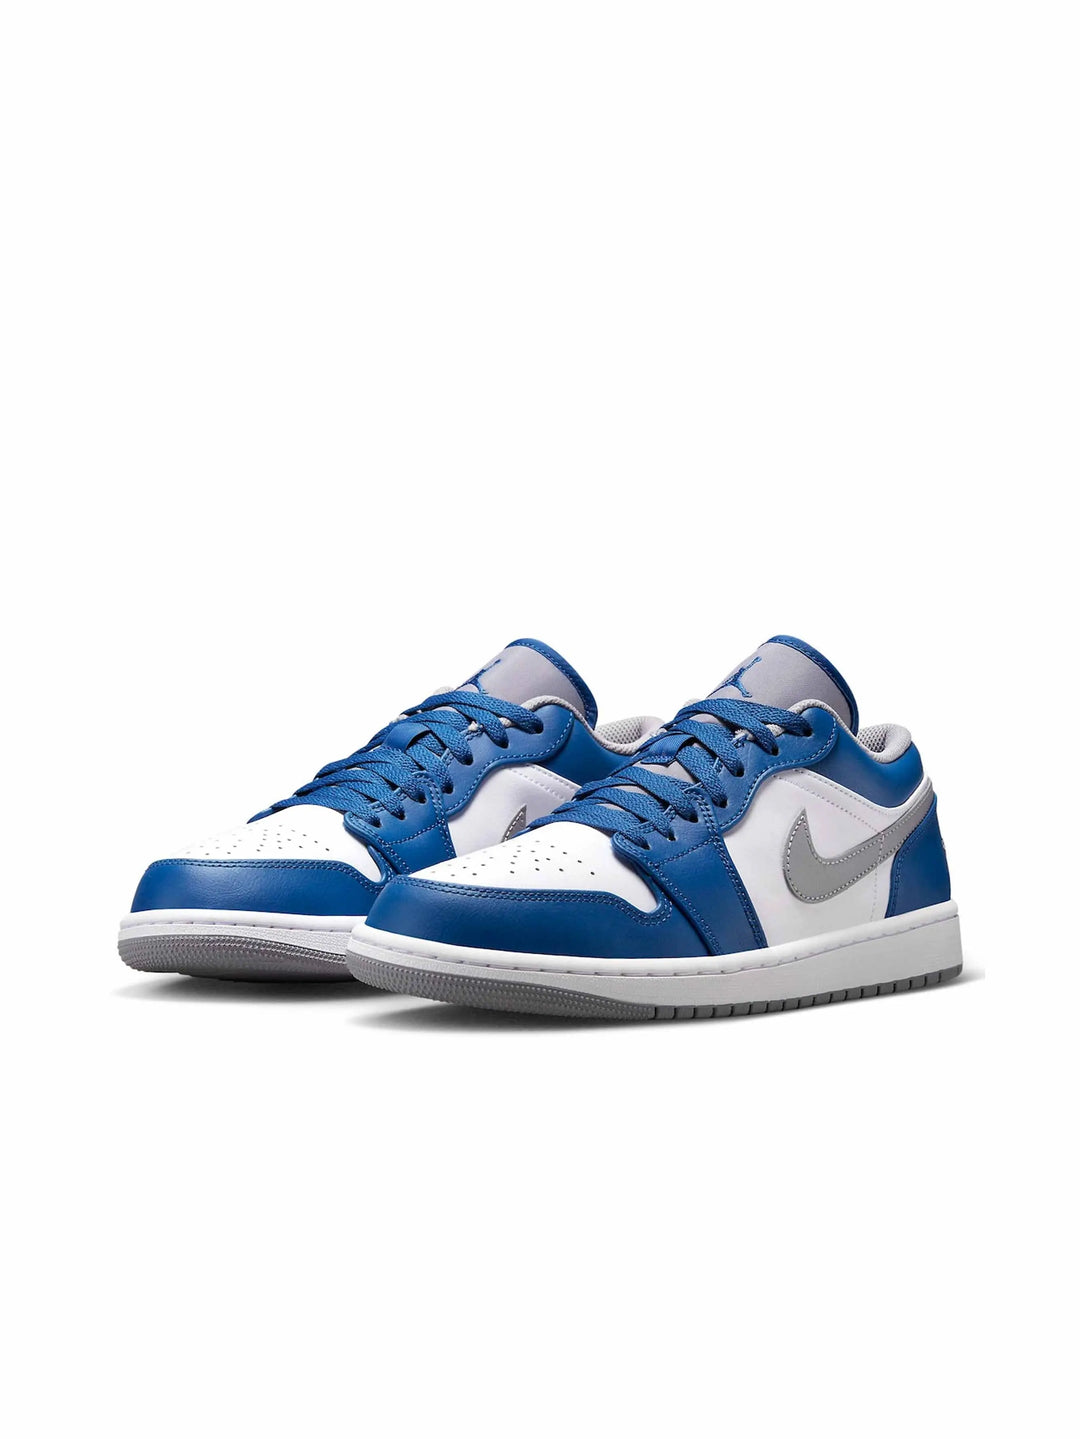 Nike Air Jordan 1 Low True Blue - Prior